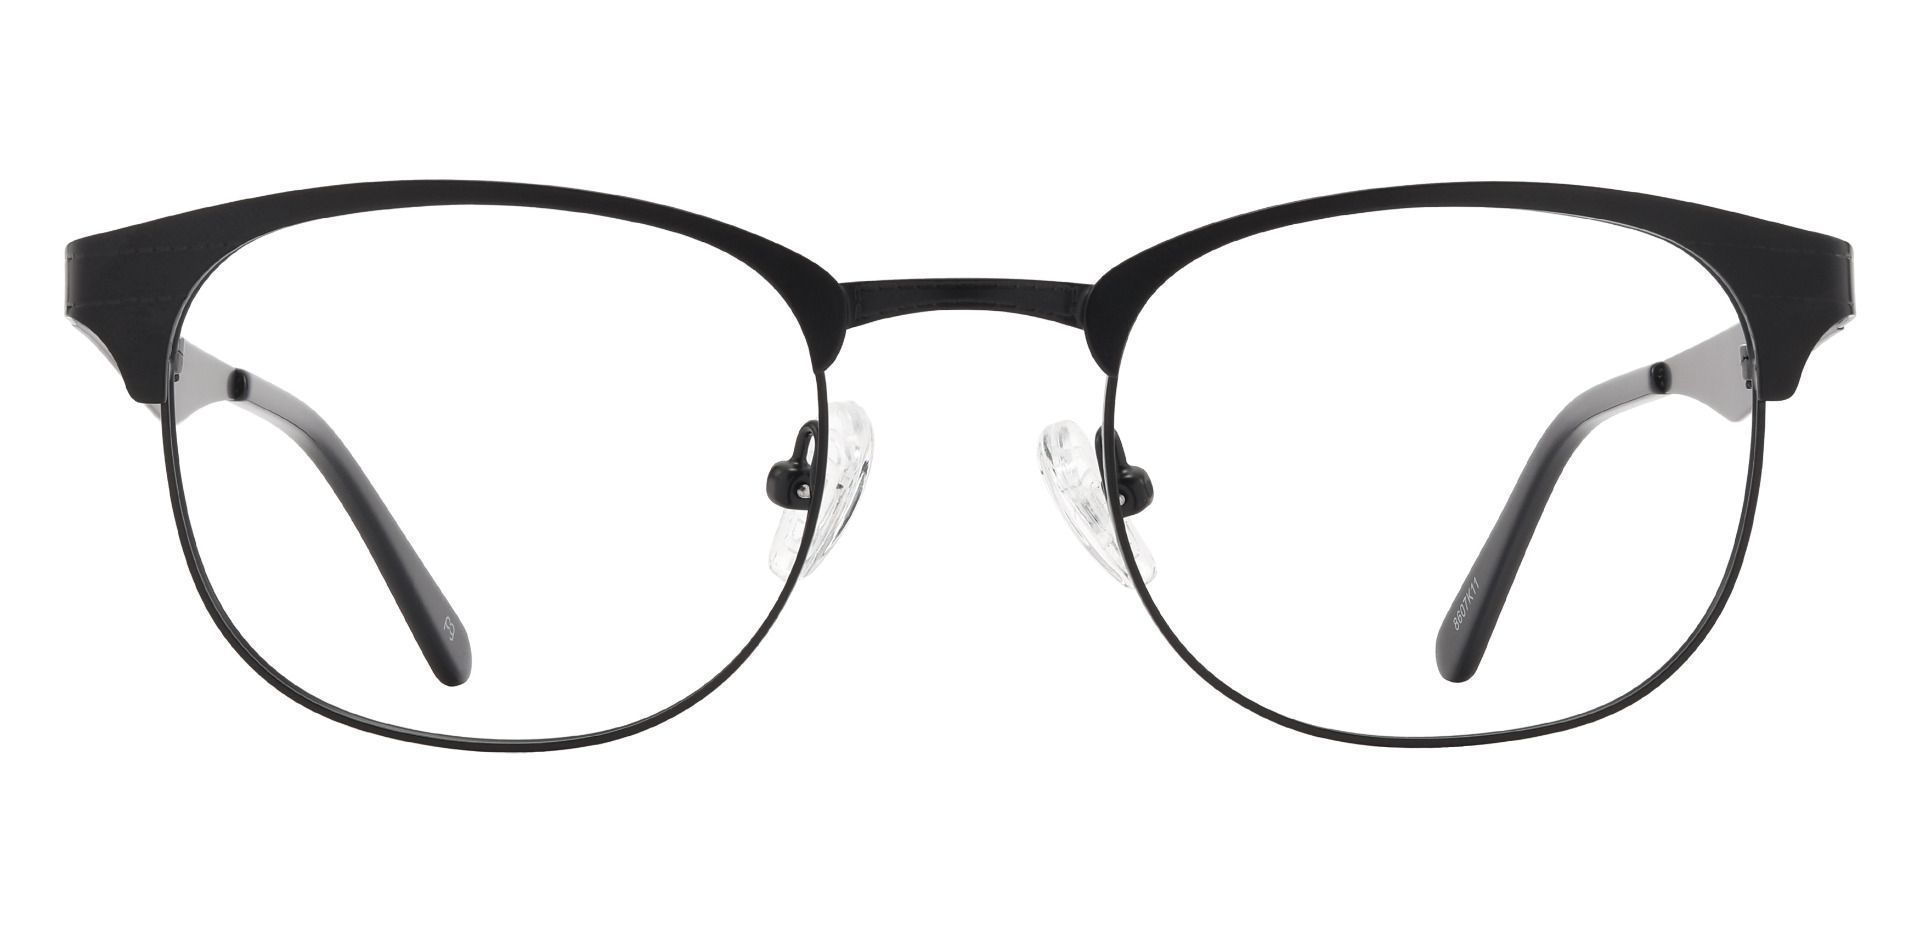 Donelson Browline Prescription Glasses - Black